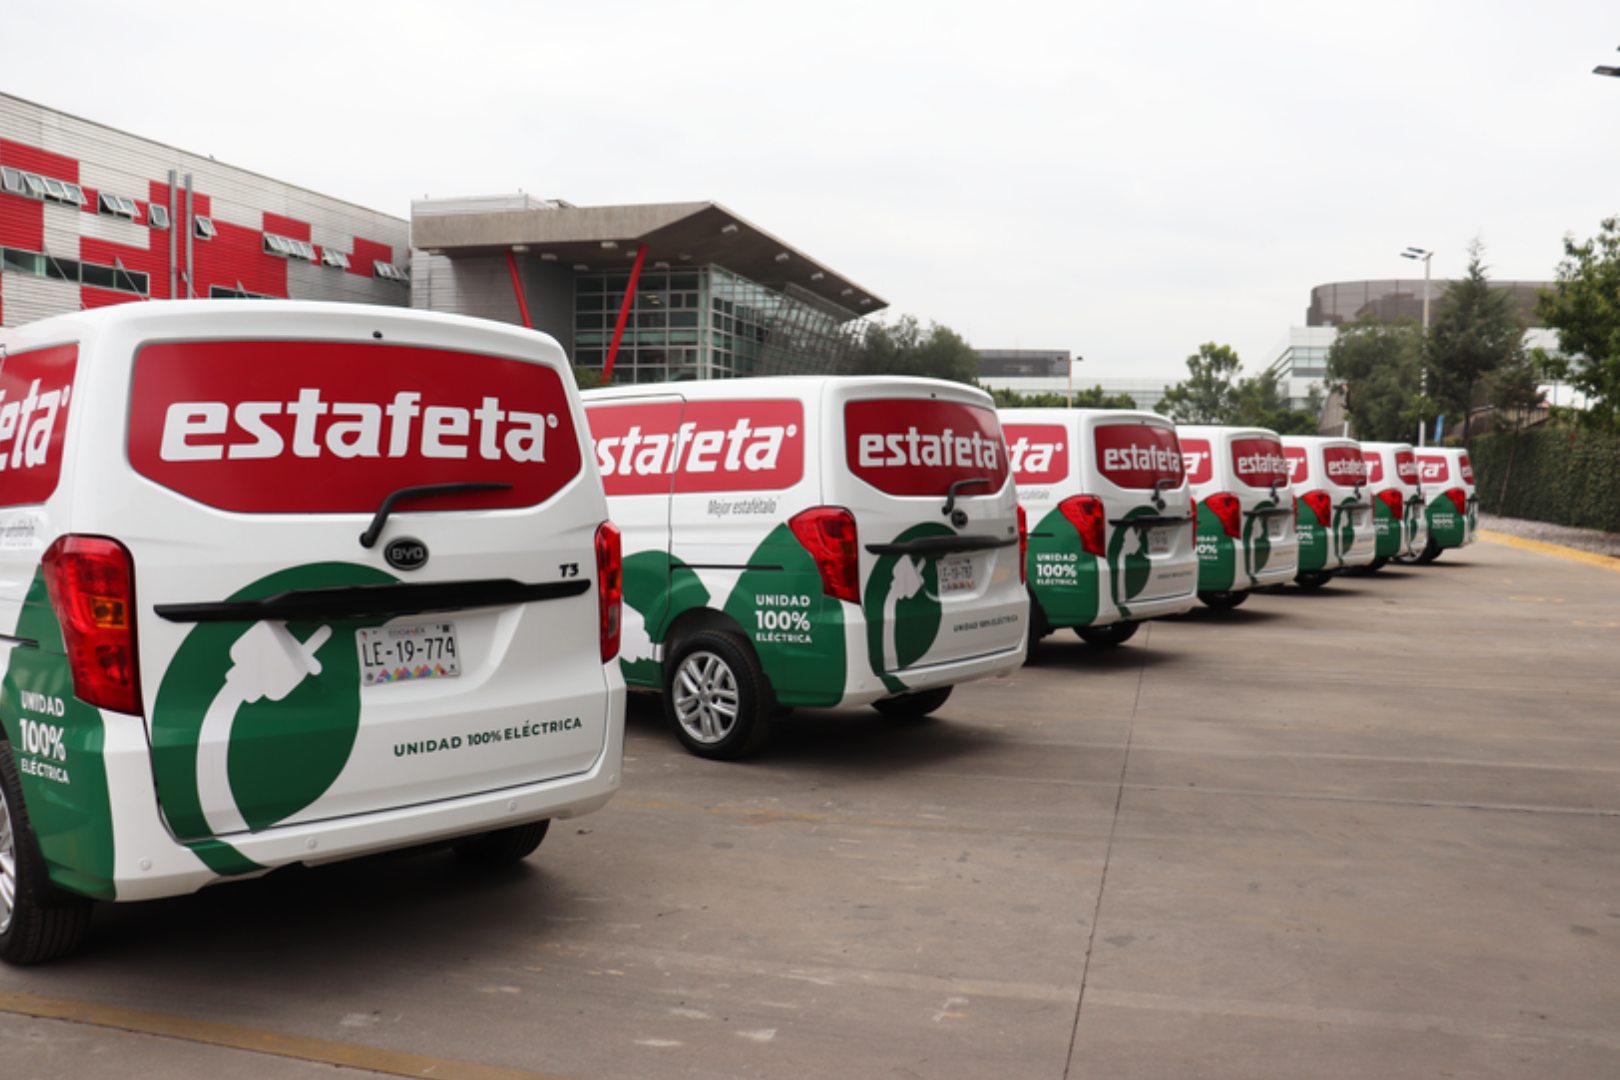 Estafeta receives 100% electric vehicle fleet